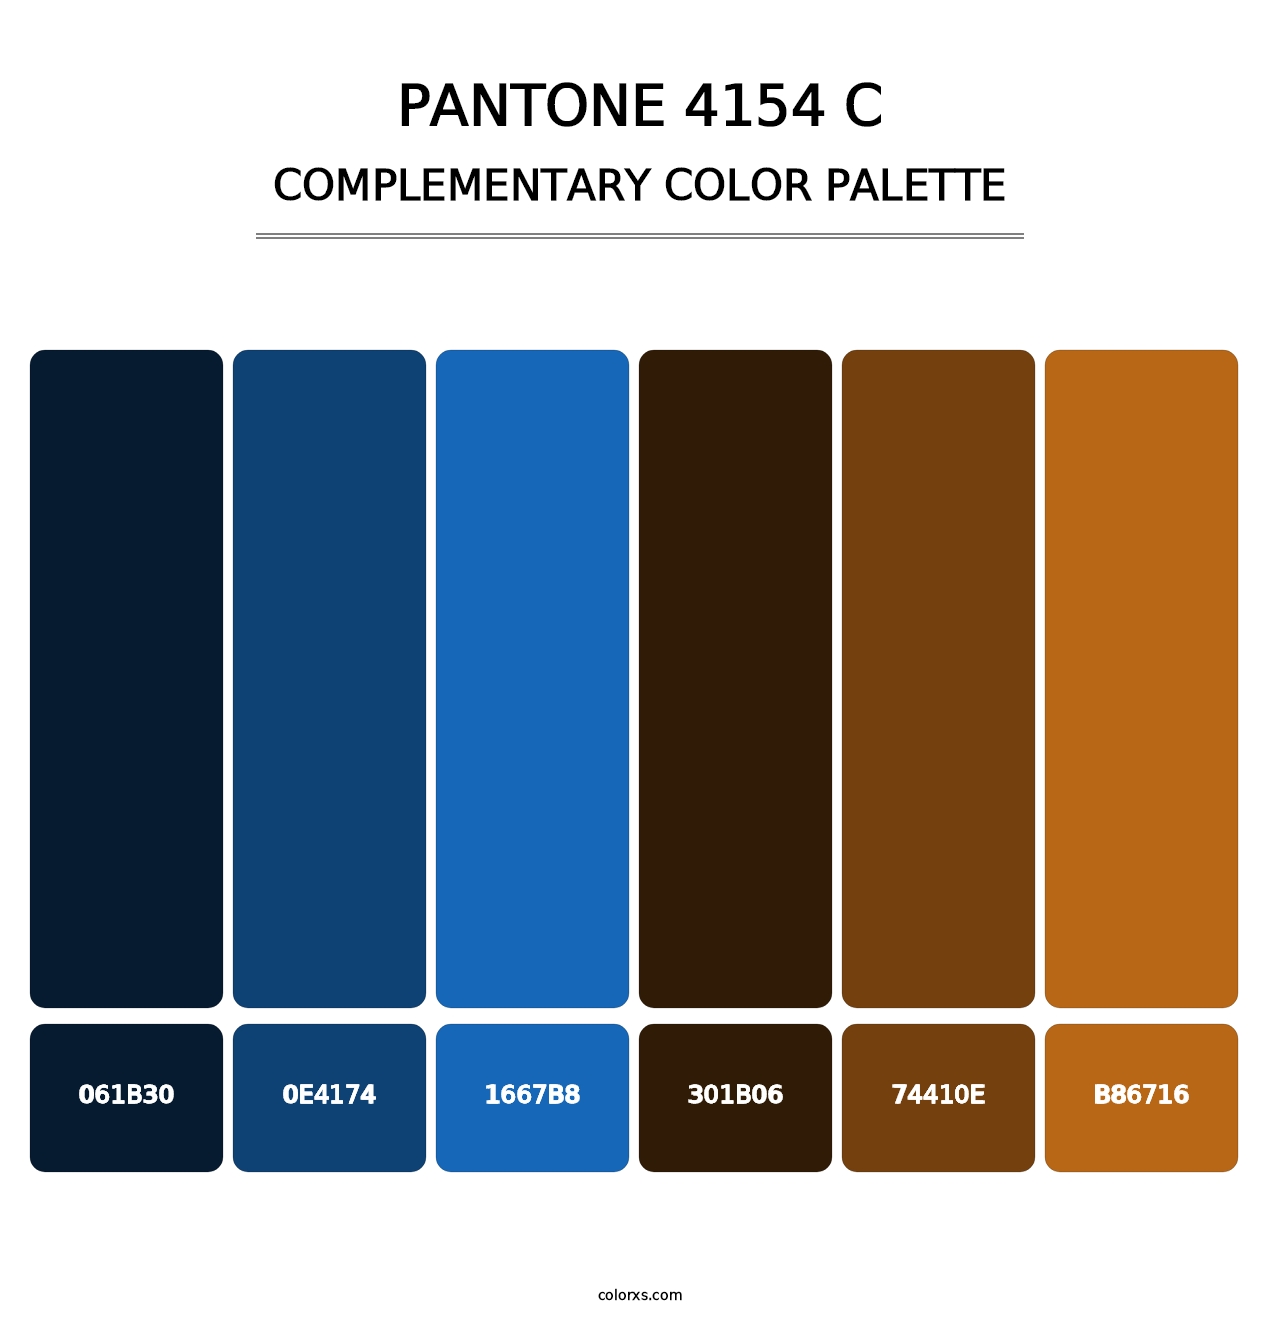 PANTONE 4154 C - Complementary Color Palette